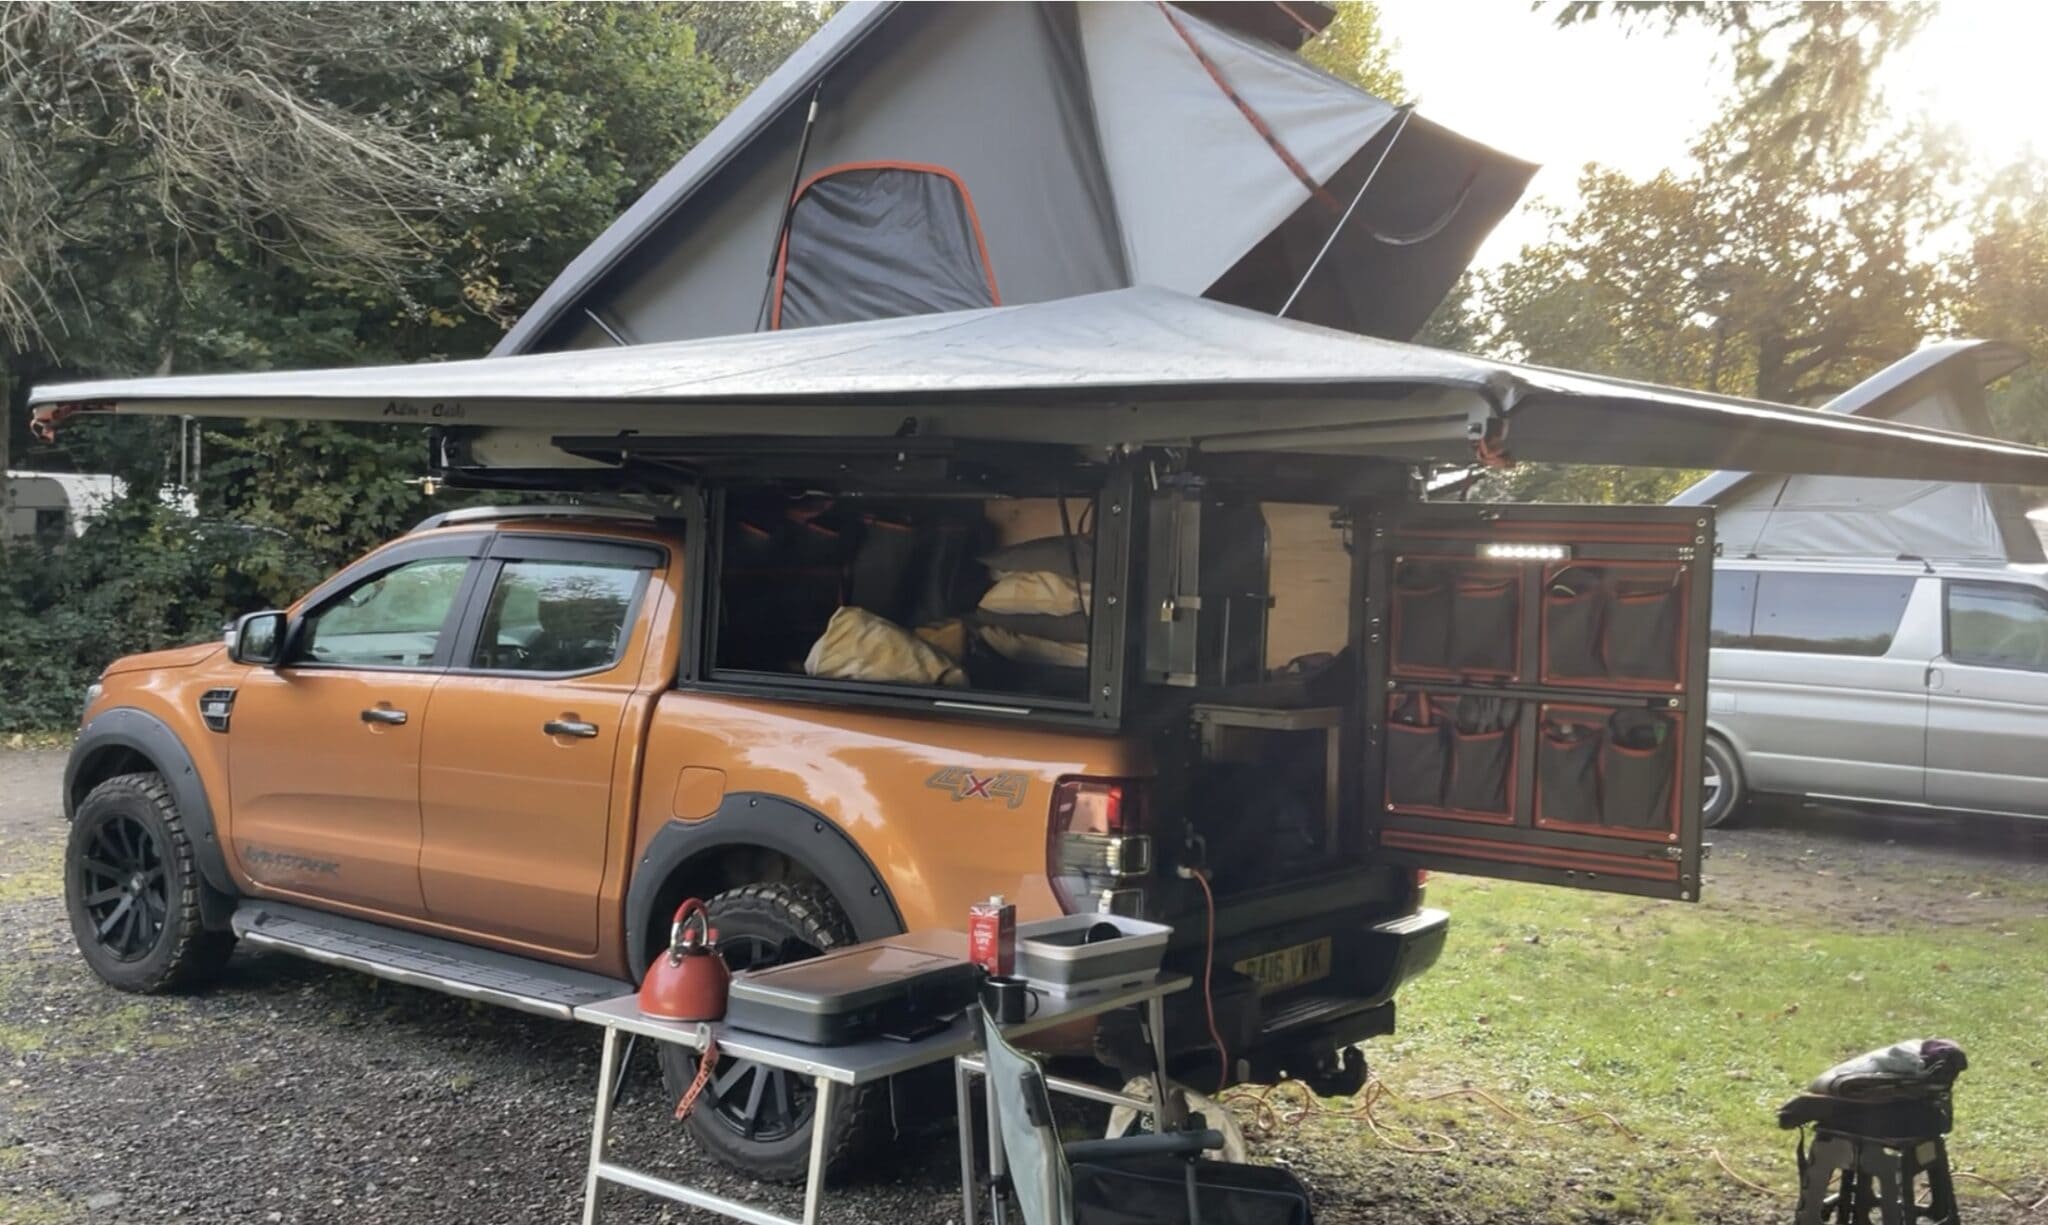 Ford Ranger Wildtrak camping